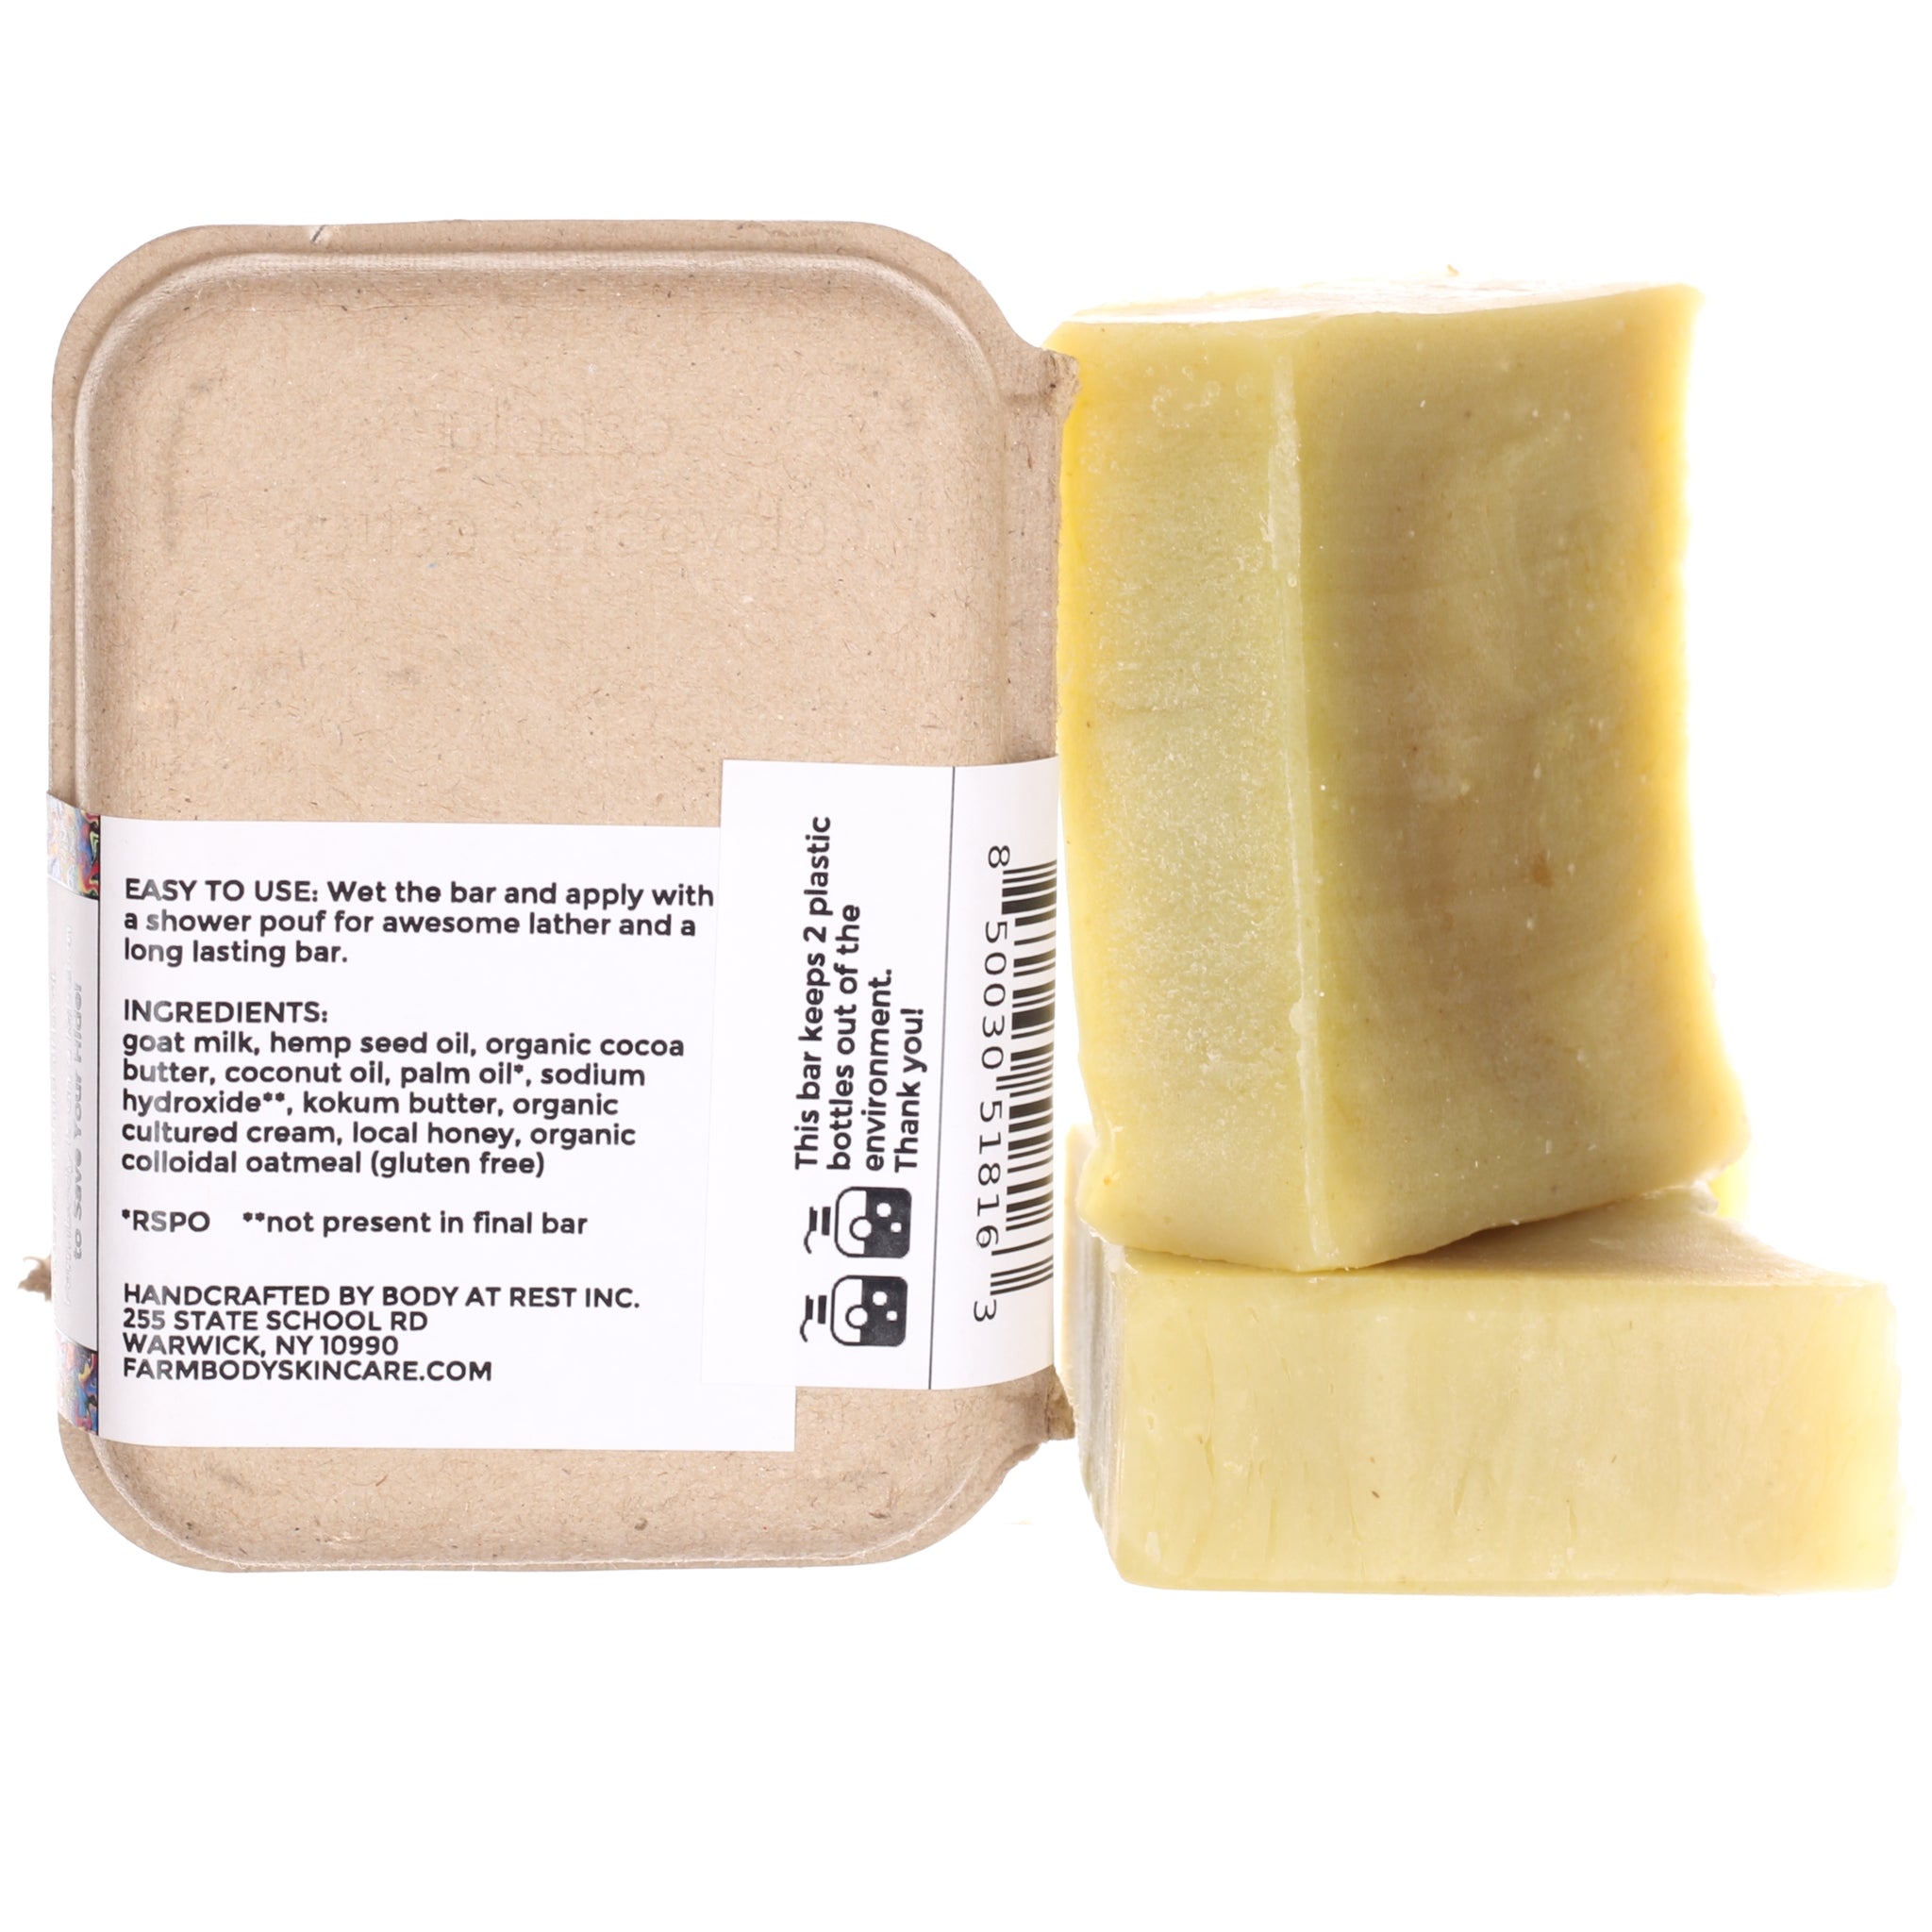 Farmbody Fragrance Free Moisturizing Goat Milk Soap With Oatmeal for Eczema and Sensitive Skin Ingredients